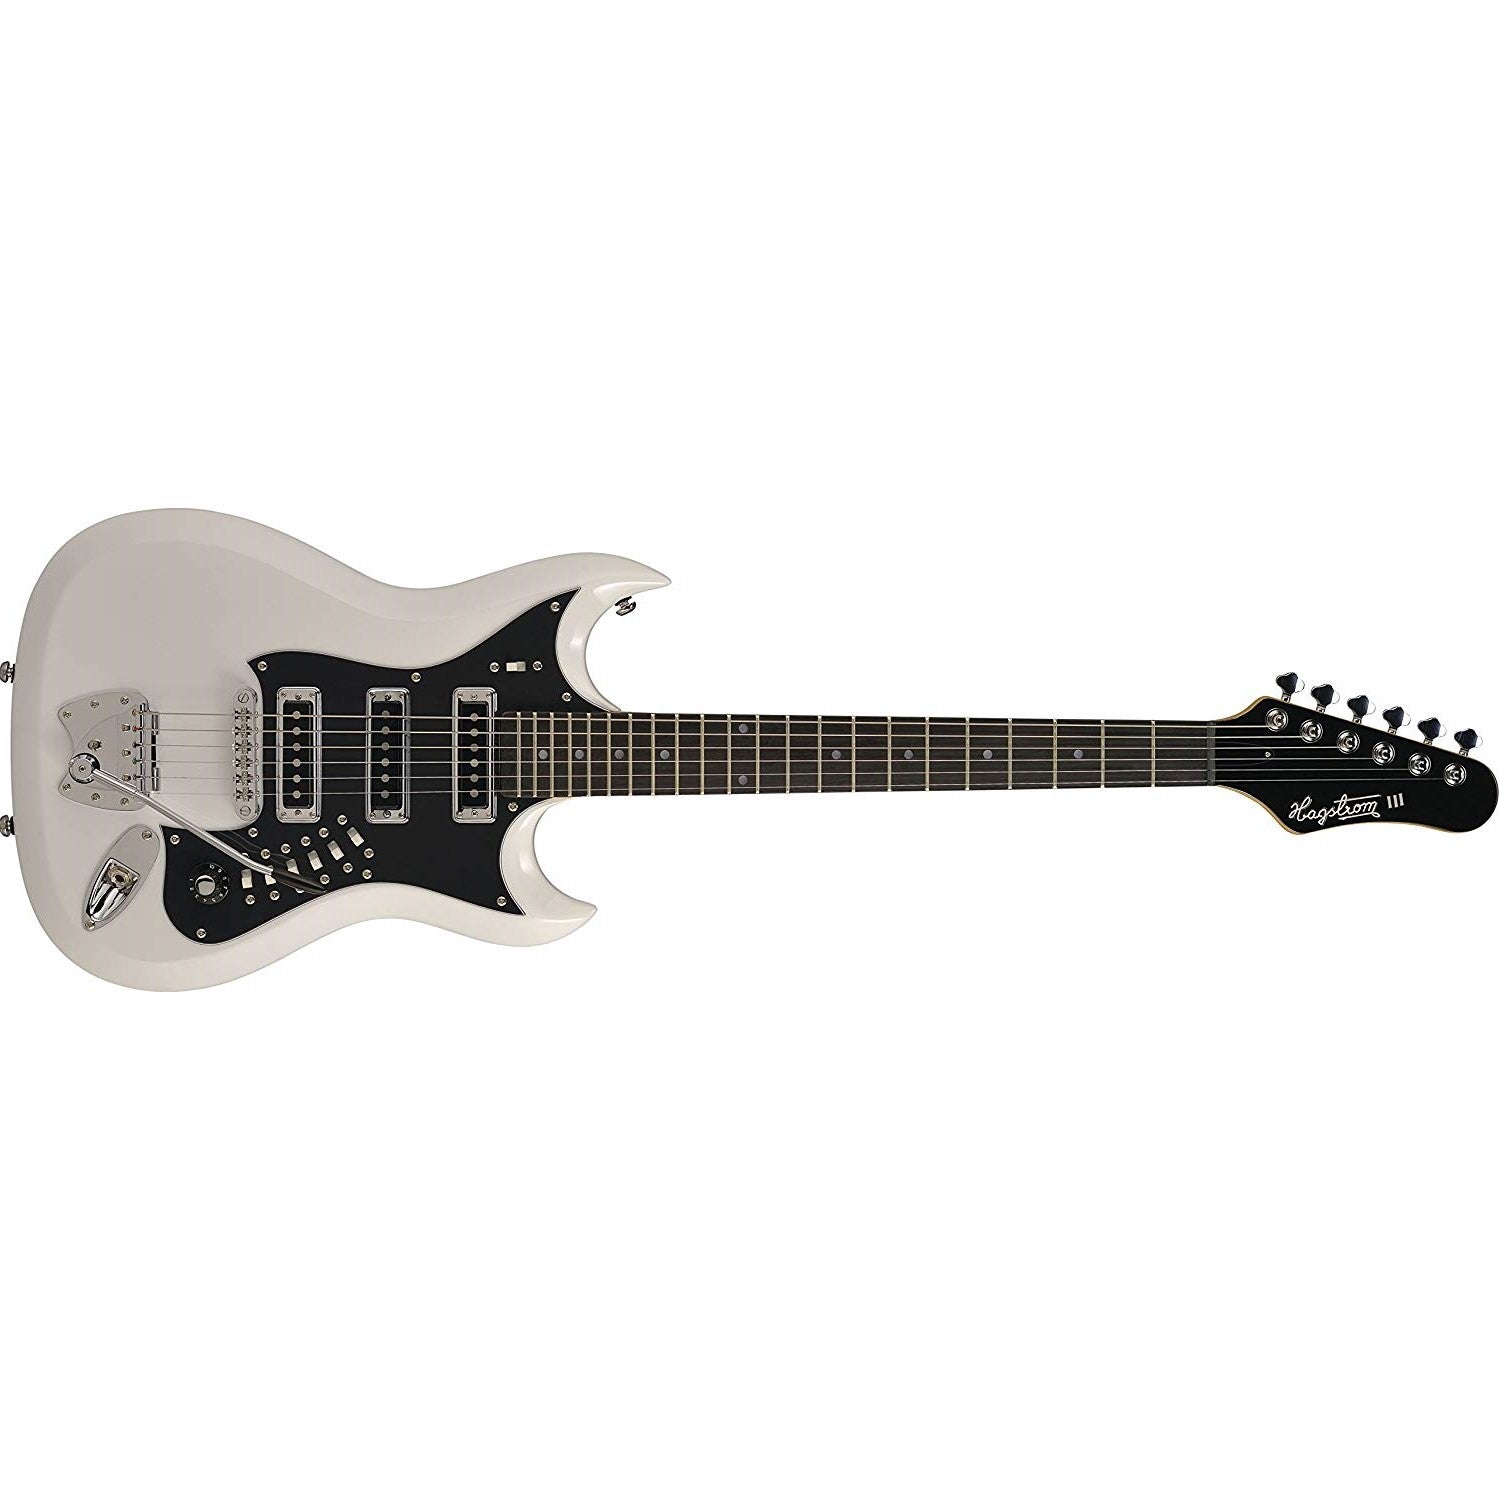 Hagstrom H-3 Retroscape Series 6 String Electric Guitar - White HIII-WHT